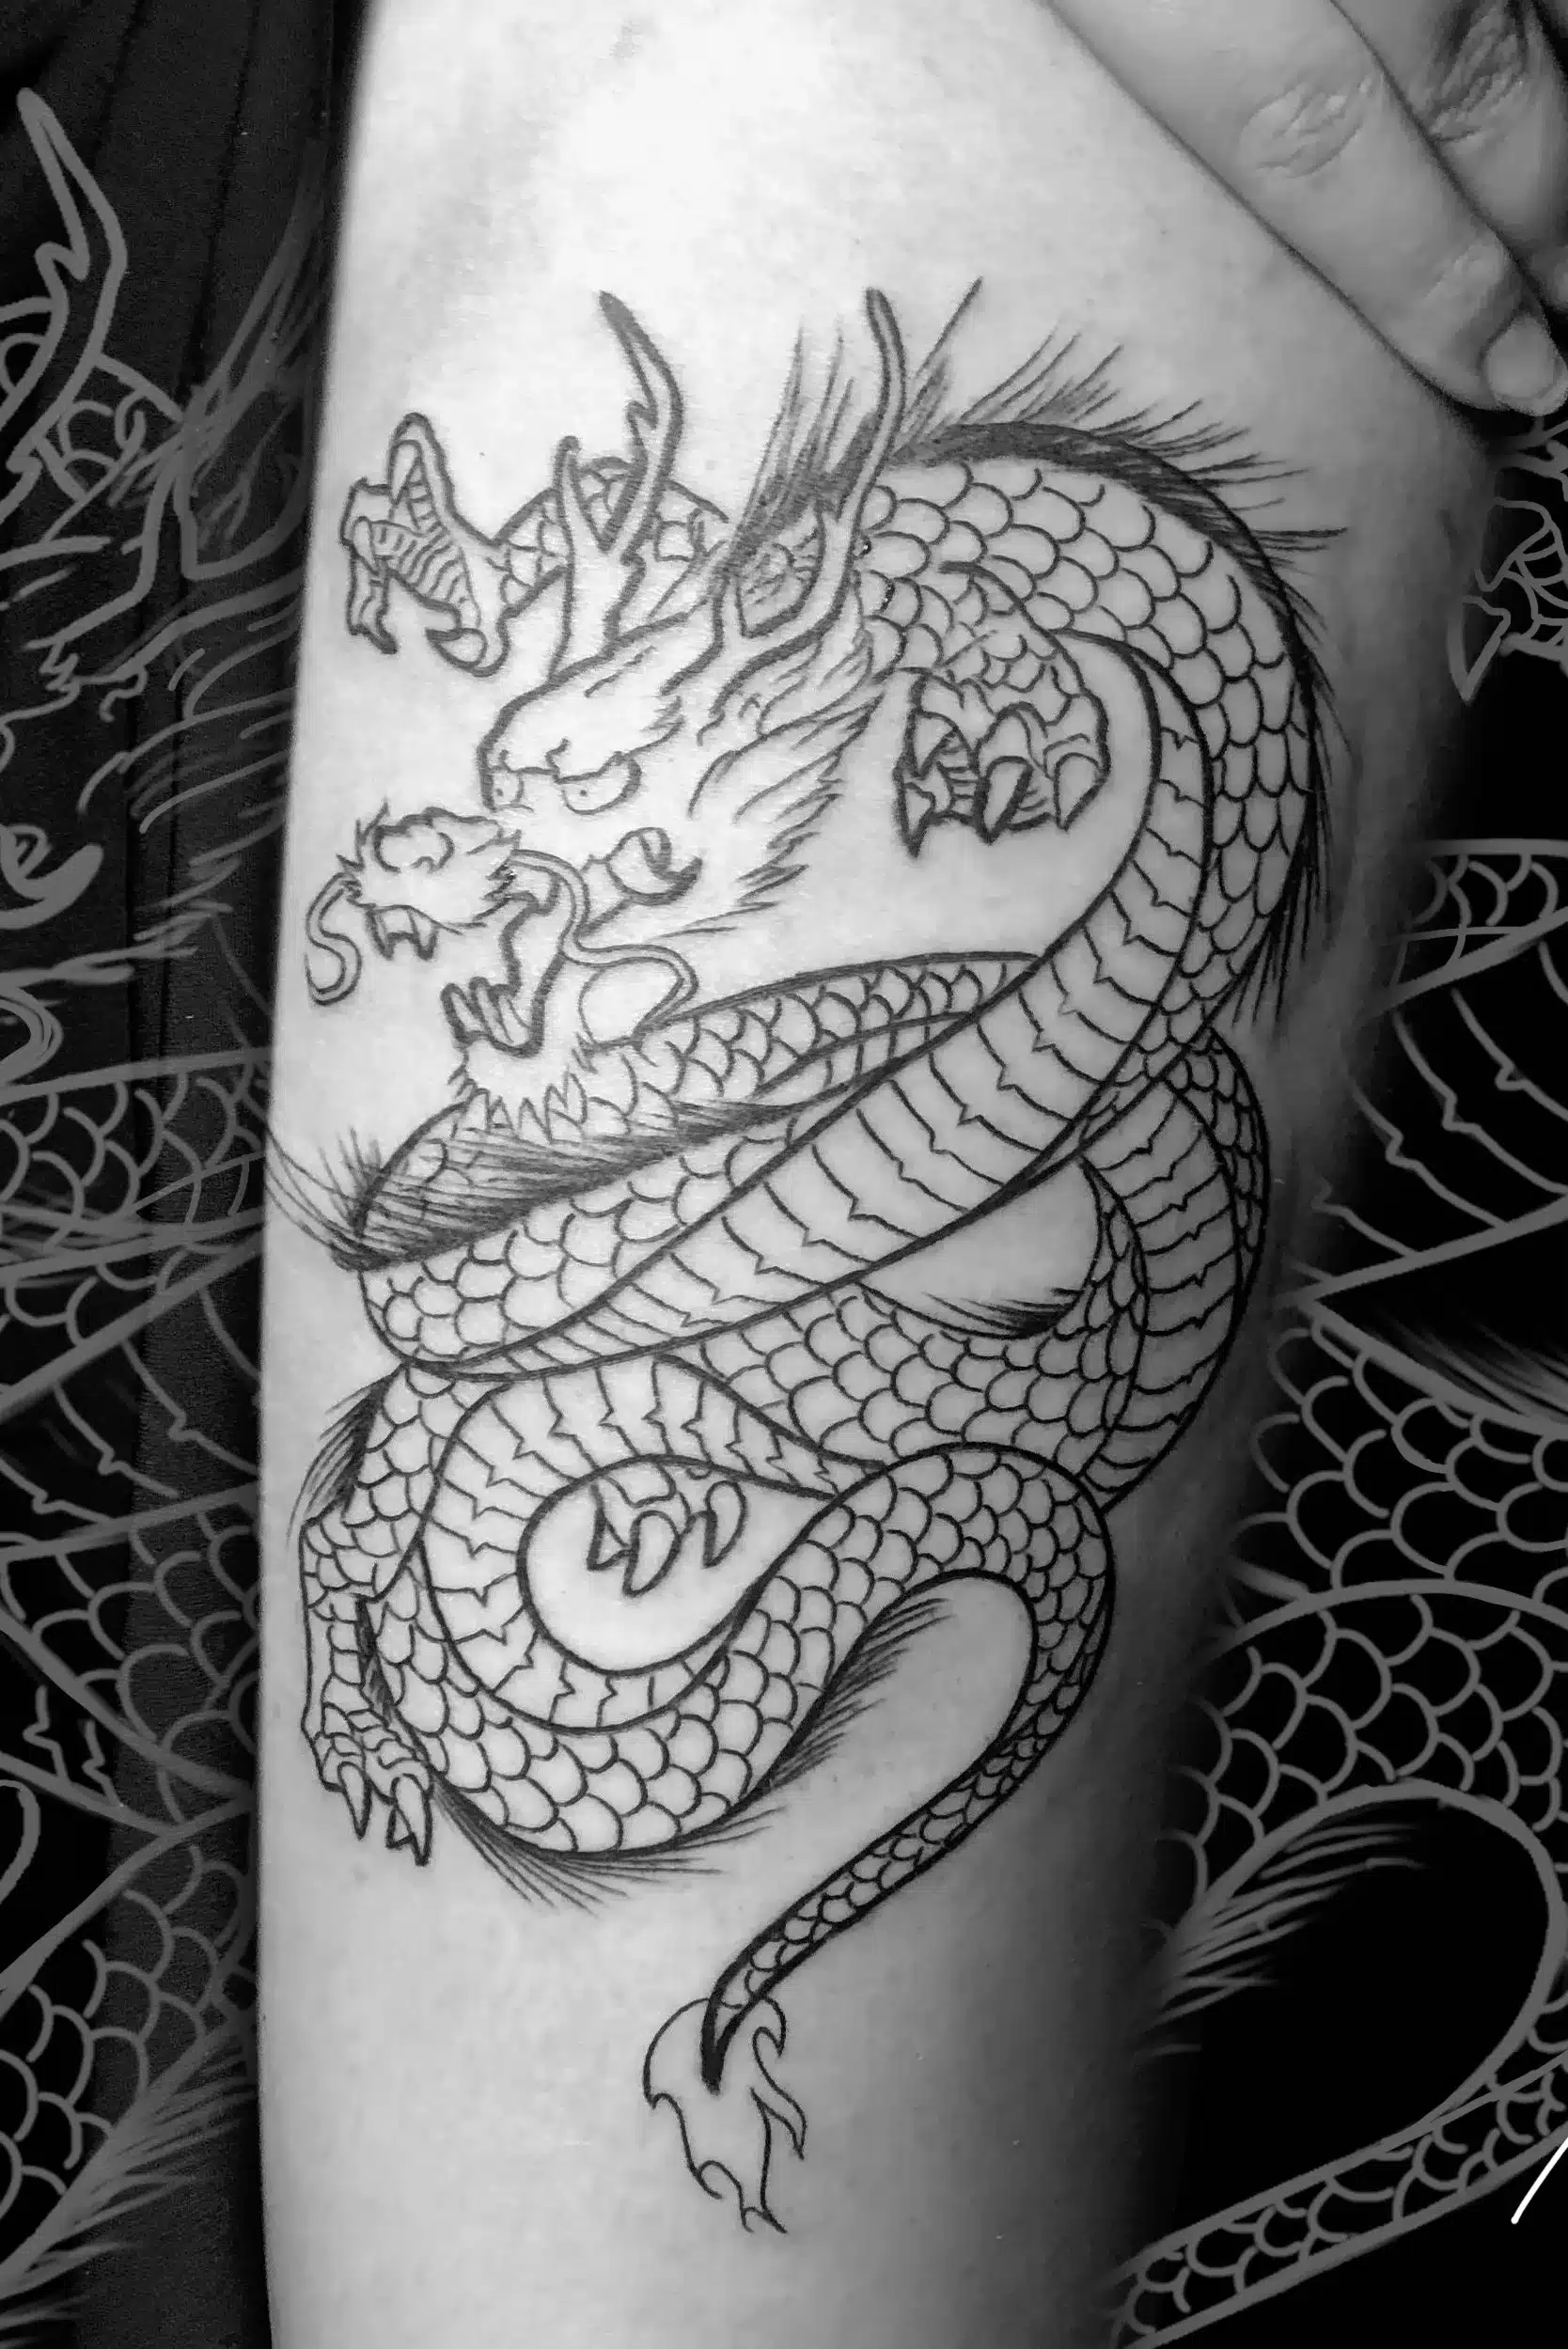 21 Shinning White Dragon Tattoo designs to brighten your day